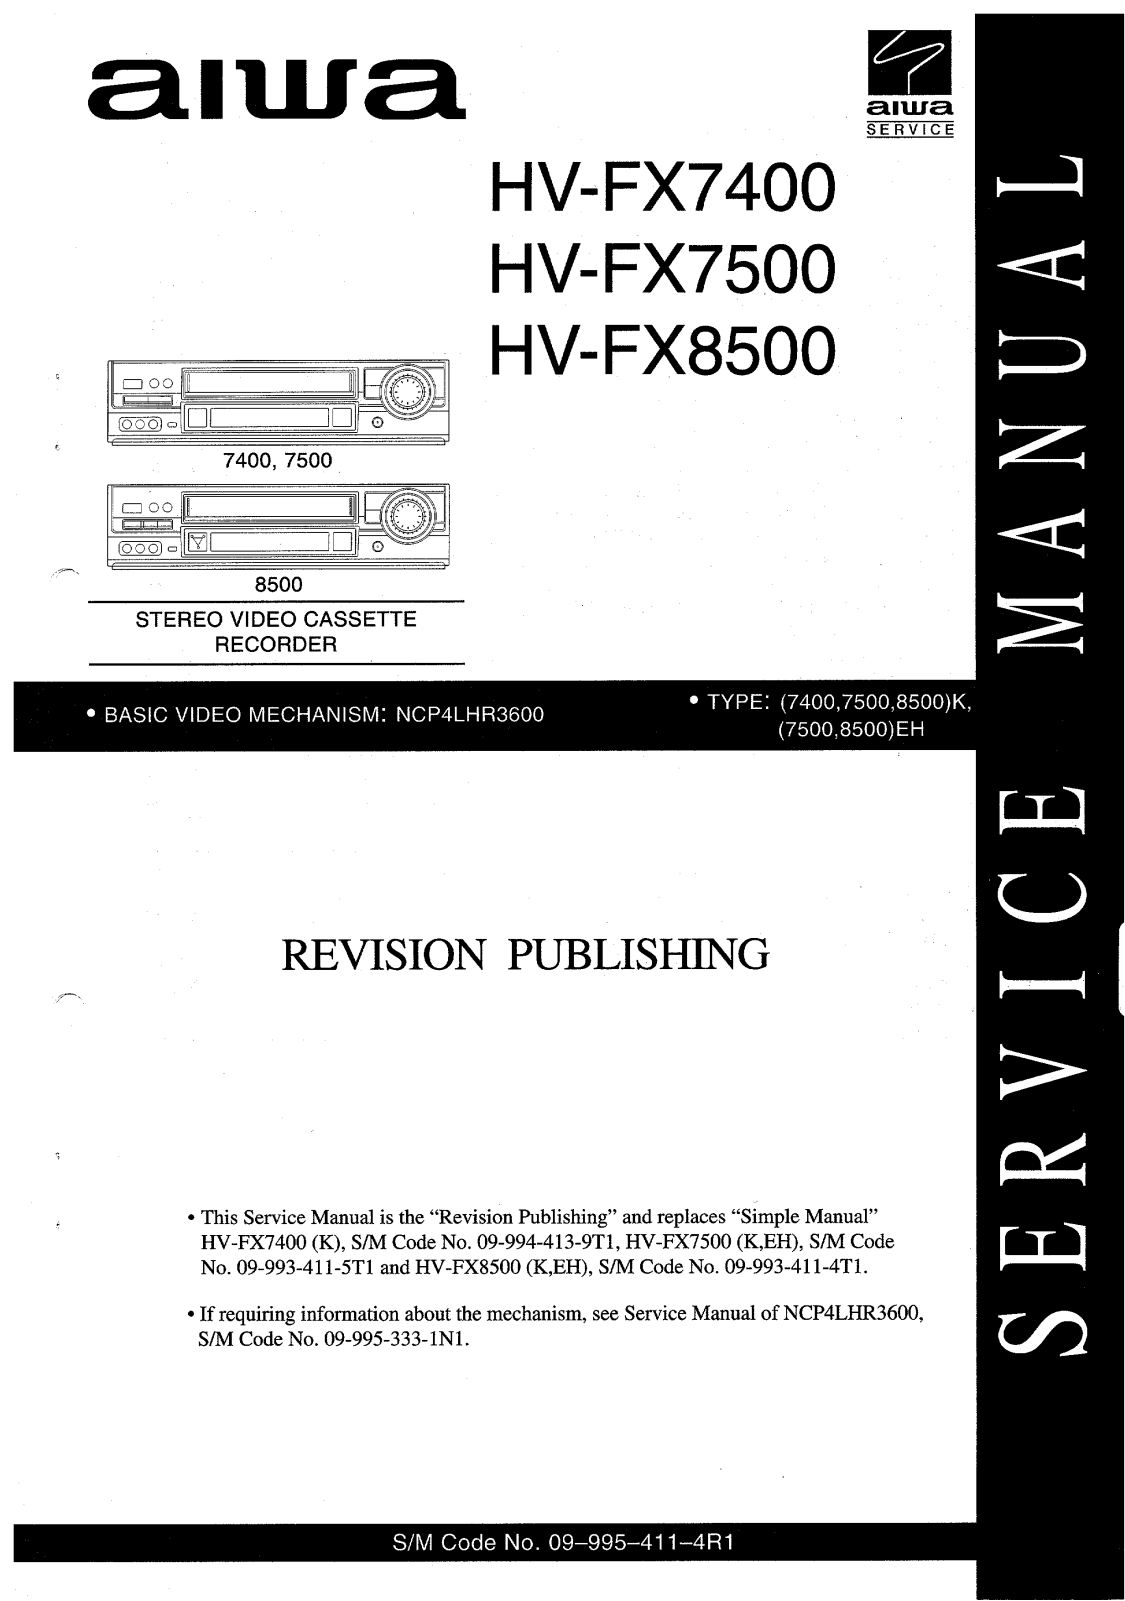 Aiwa HV-FX7400, HV-FX 7500, HV-FX 8500 Service Manual